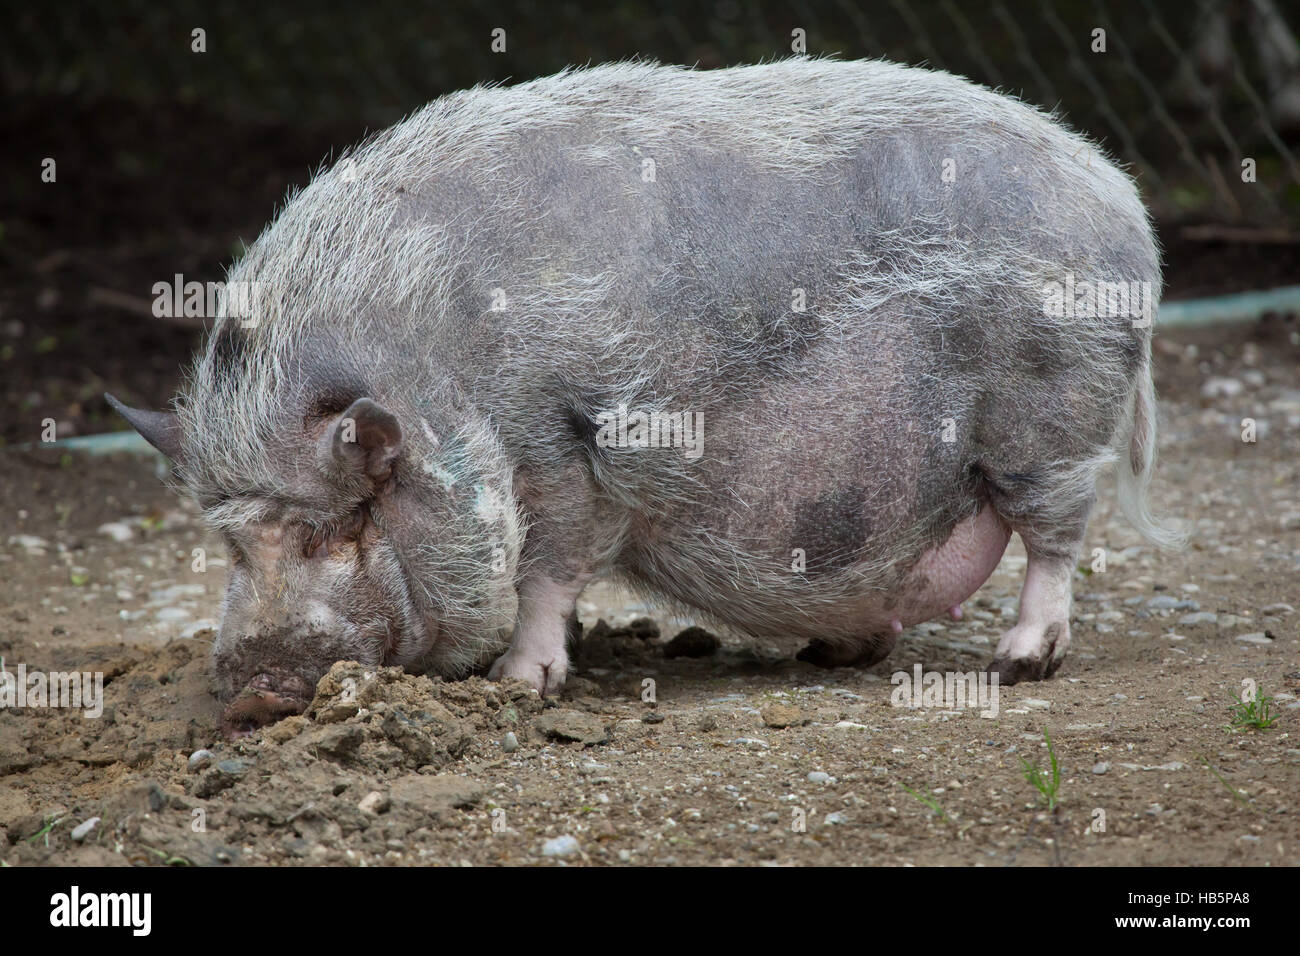 Pot-bellied pig (Sus scrofa f. domesticus). Domestic animal. Stock Photo